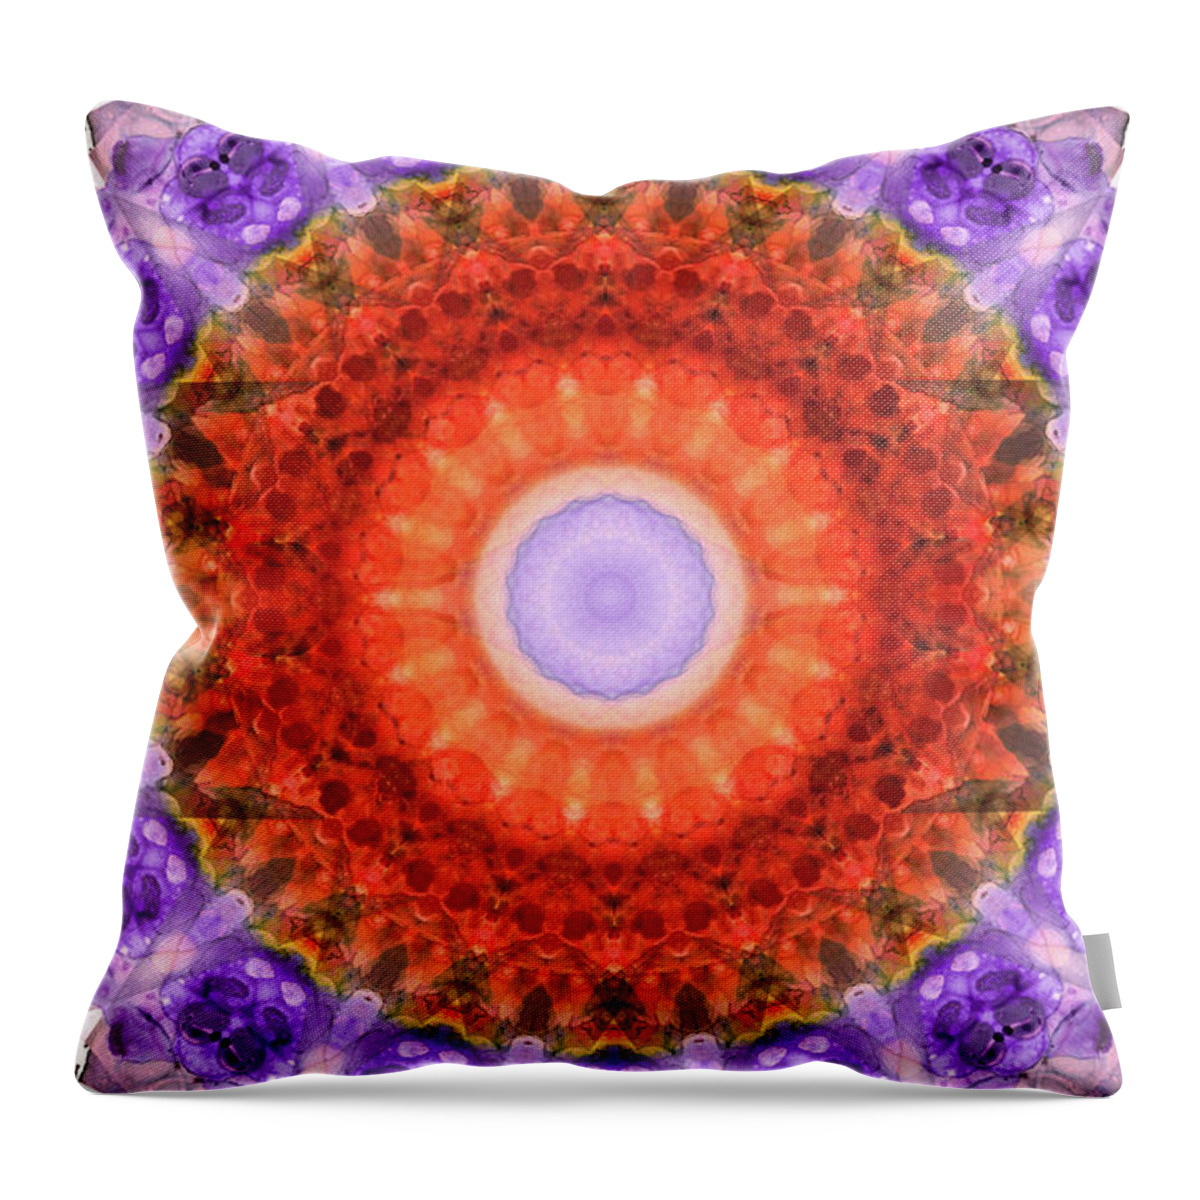 Mandala Throw Pillow featuring the painting Majesty Mandala Art by Sharon Cummings by Sharon Cummings